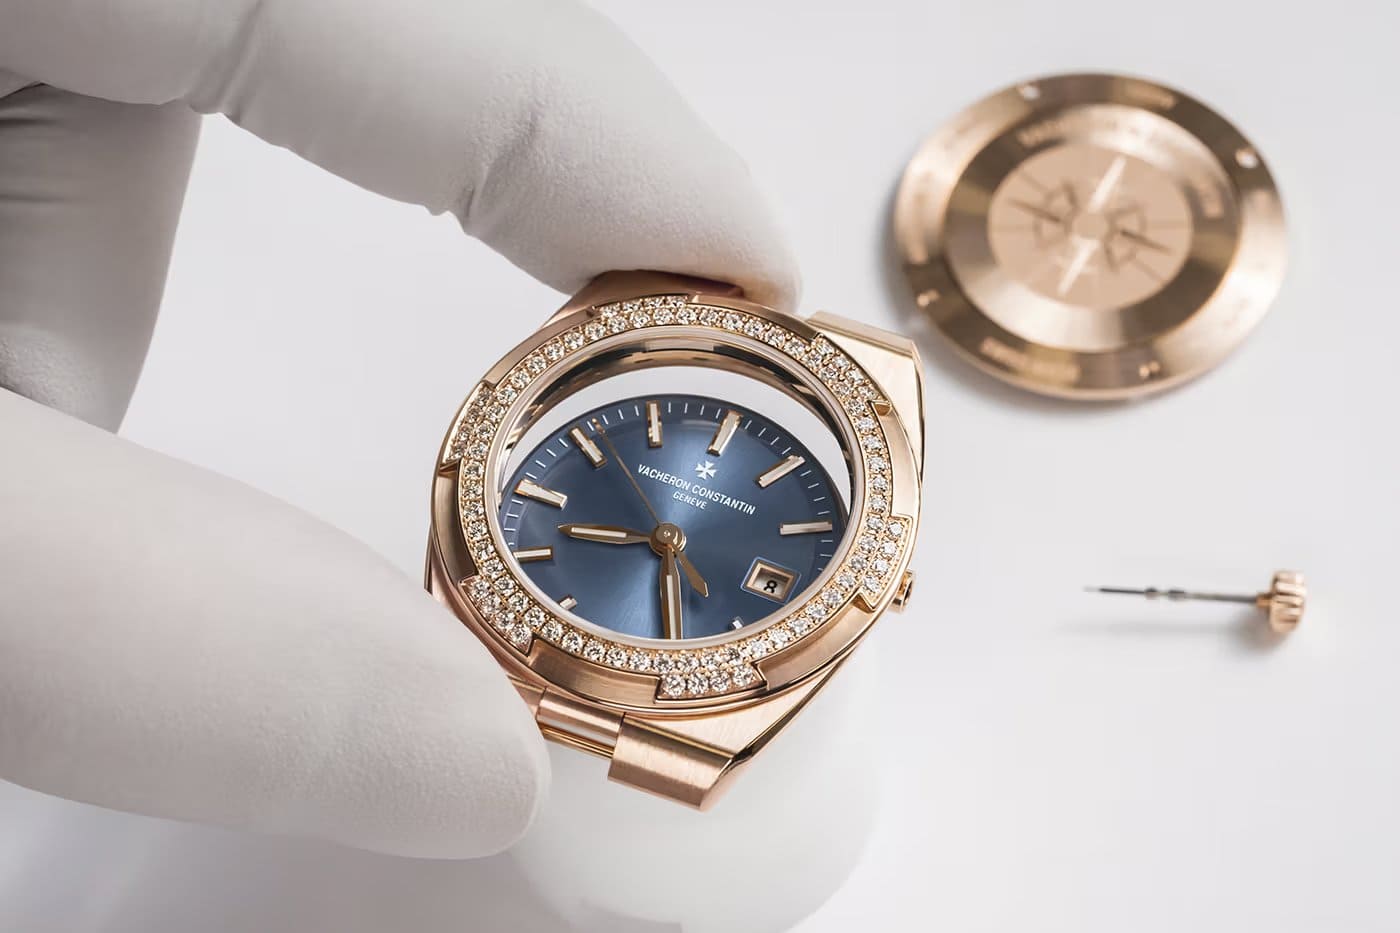 Vacheron Constantin Overseas quartz 33 mm watch in rose gold